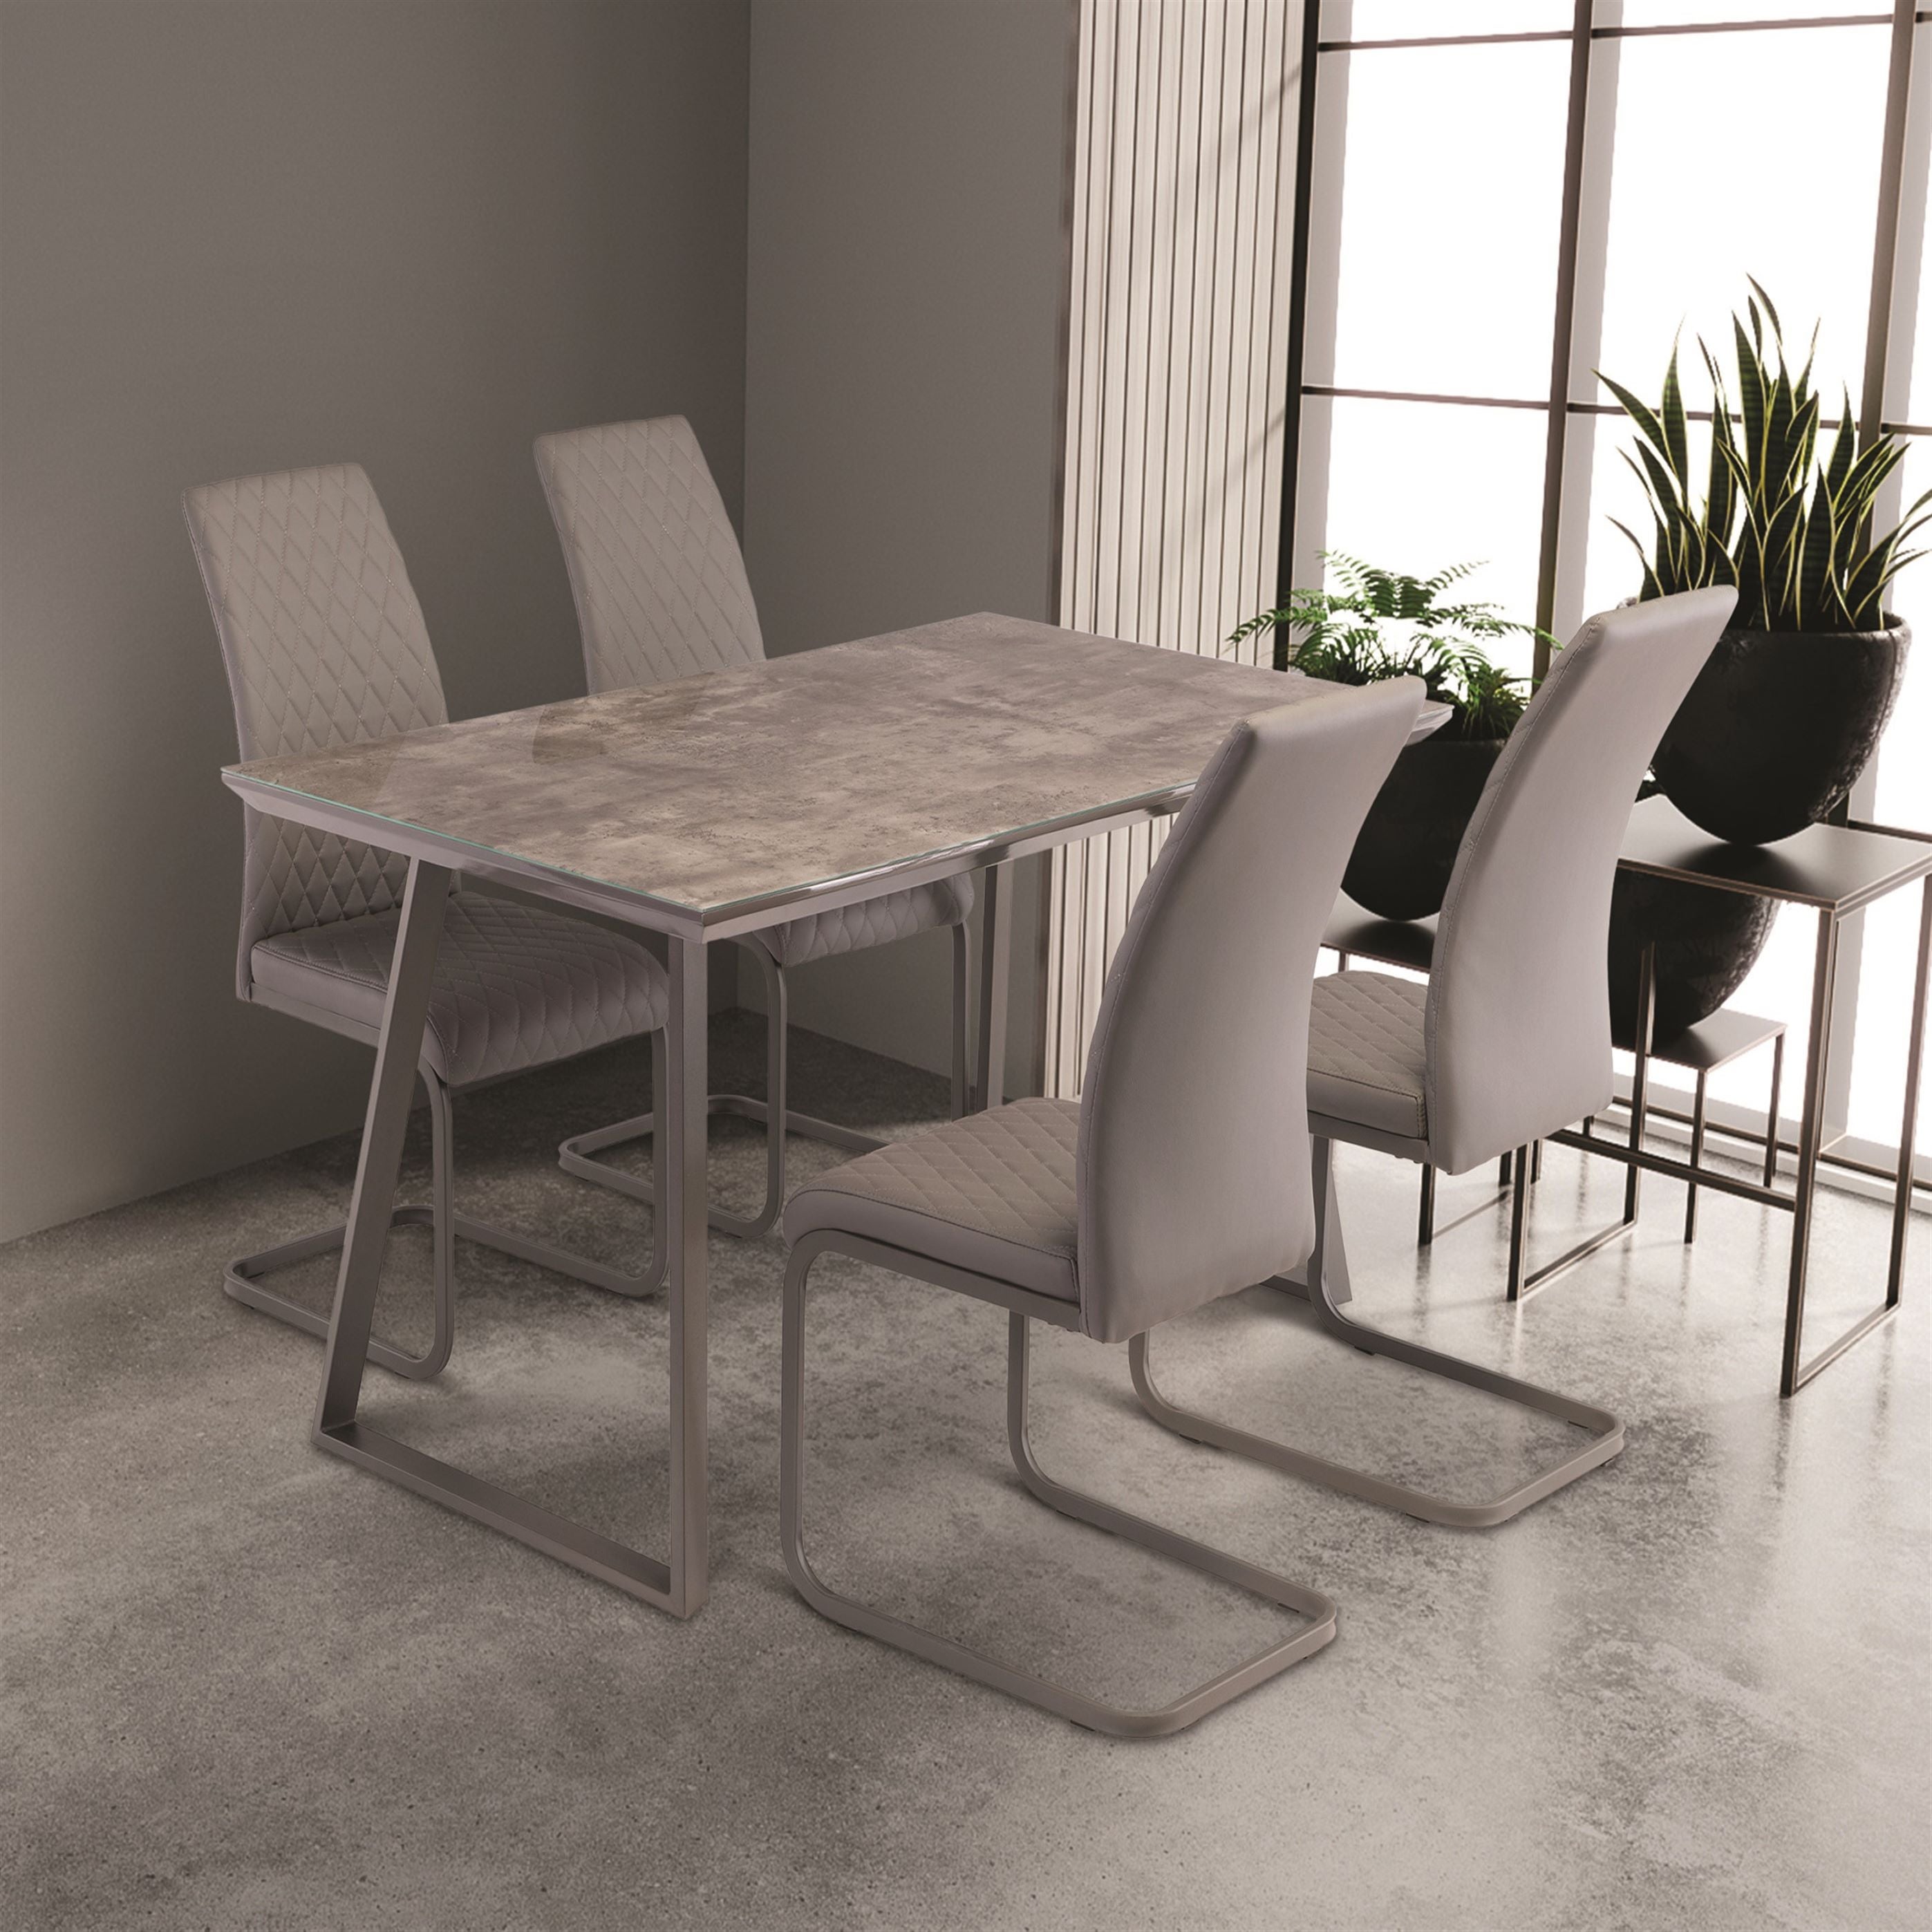 Paris 4 Seater Rectangular Glass Top Dining Table, Concrete Effect Grey